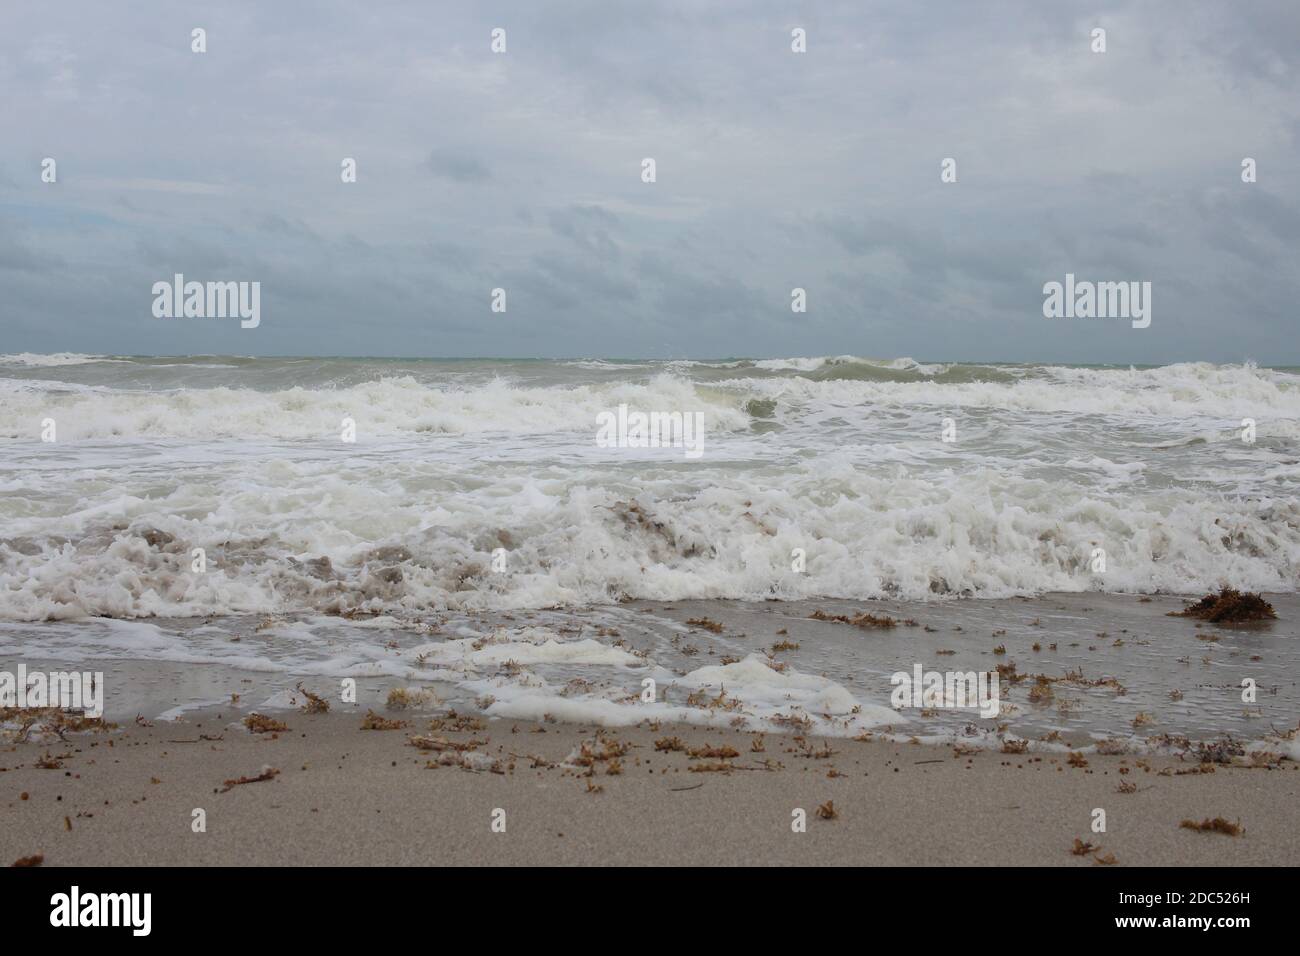 Choppy waves on a gloomy day - medium shot Stock Photo